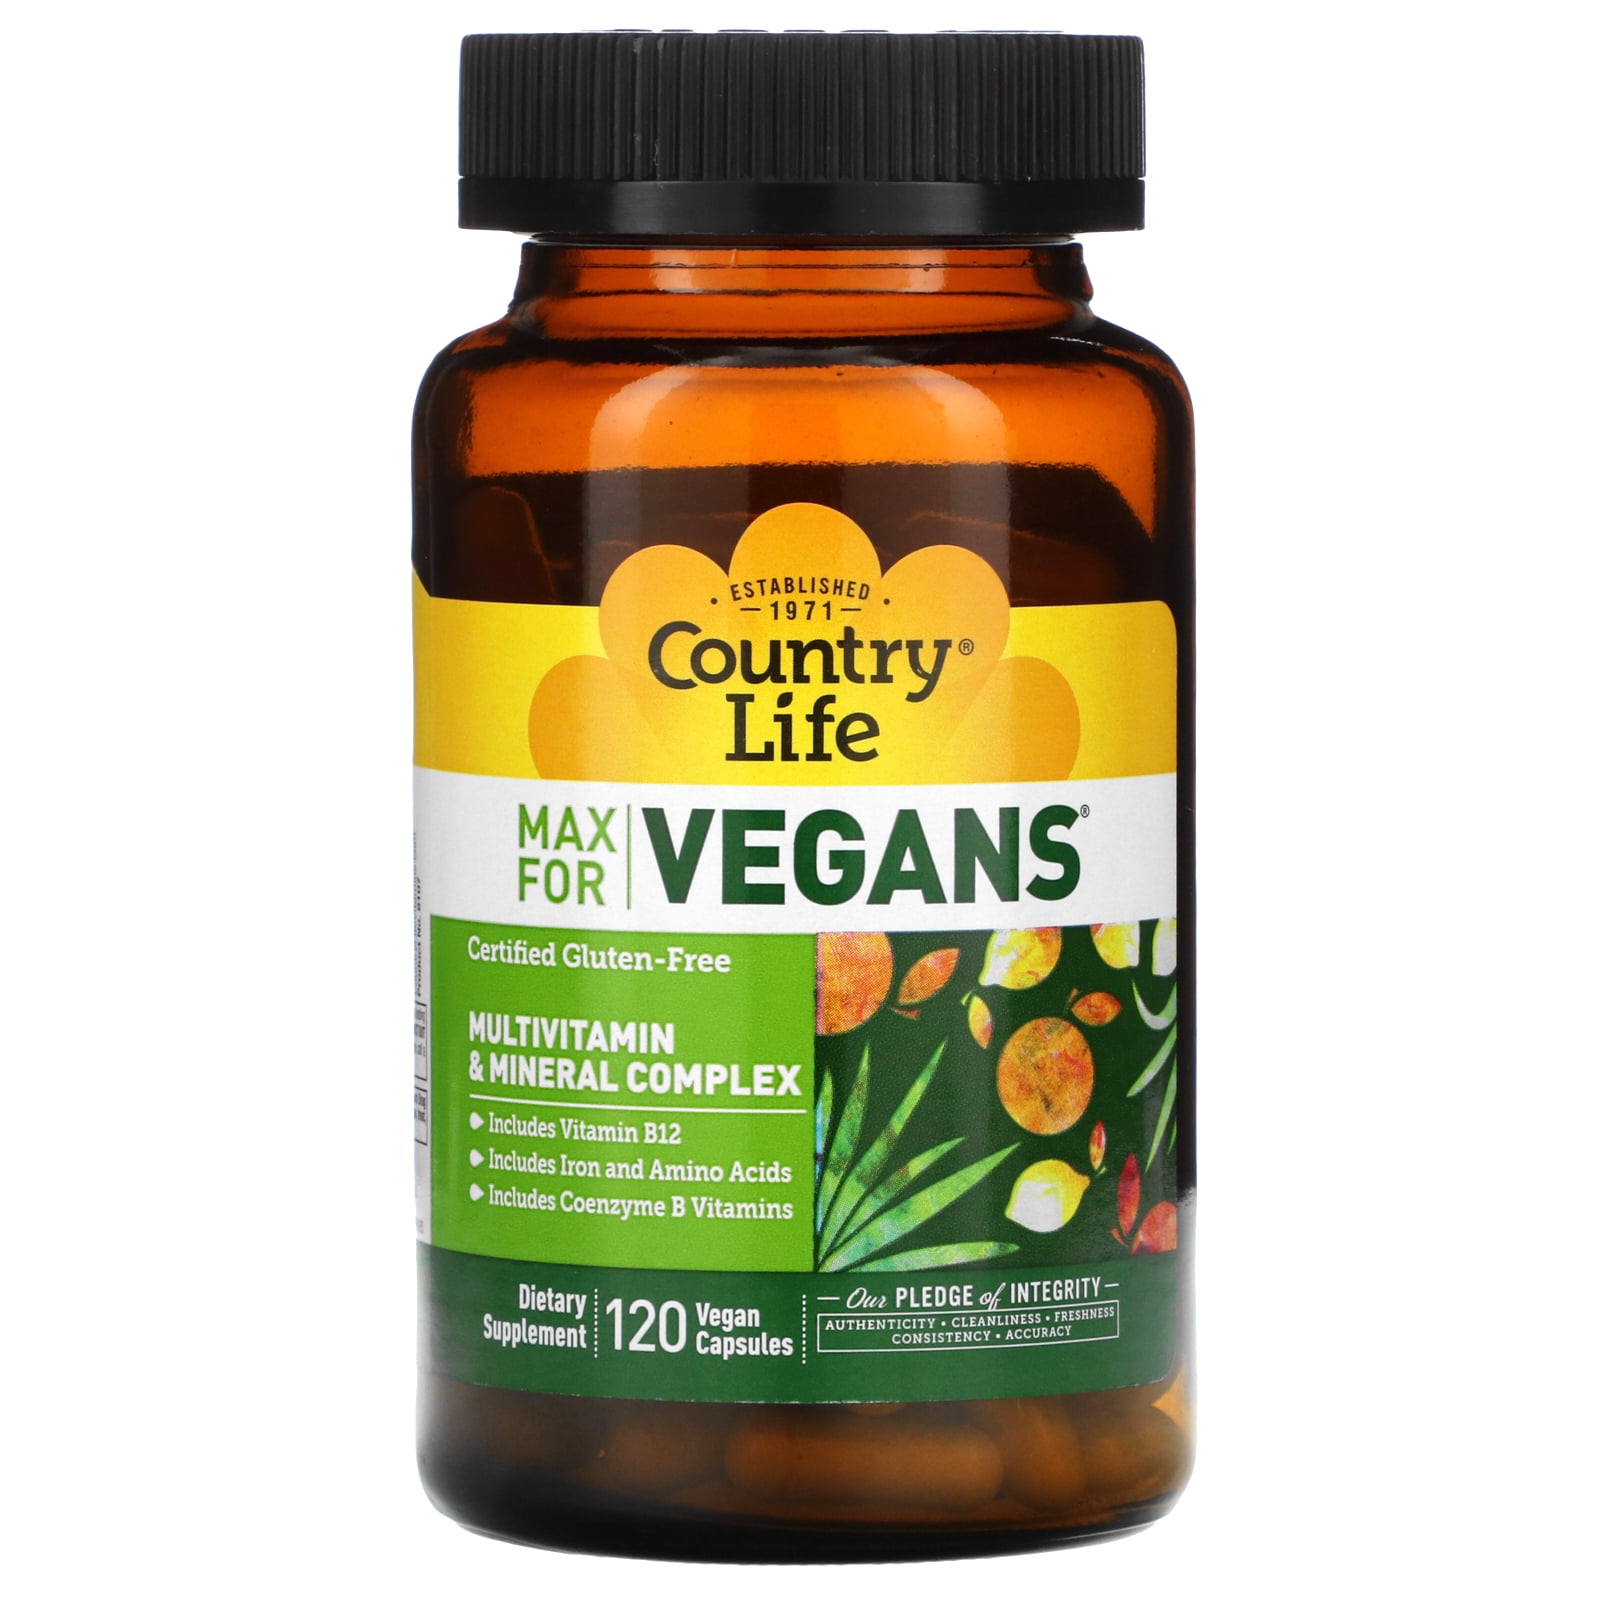 Bezet commentaar Actief MegaFood - Vegan B12 Multivitamin - 30 Tablets - Walmart.com